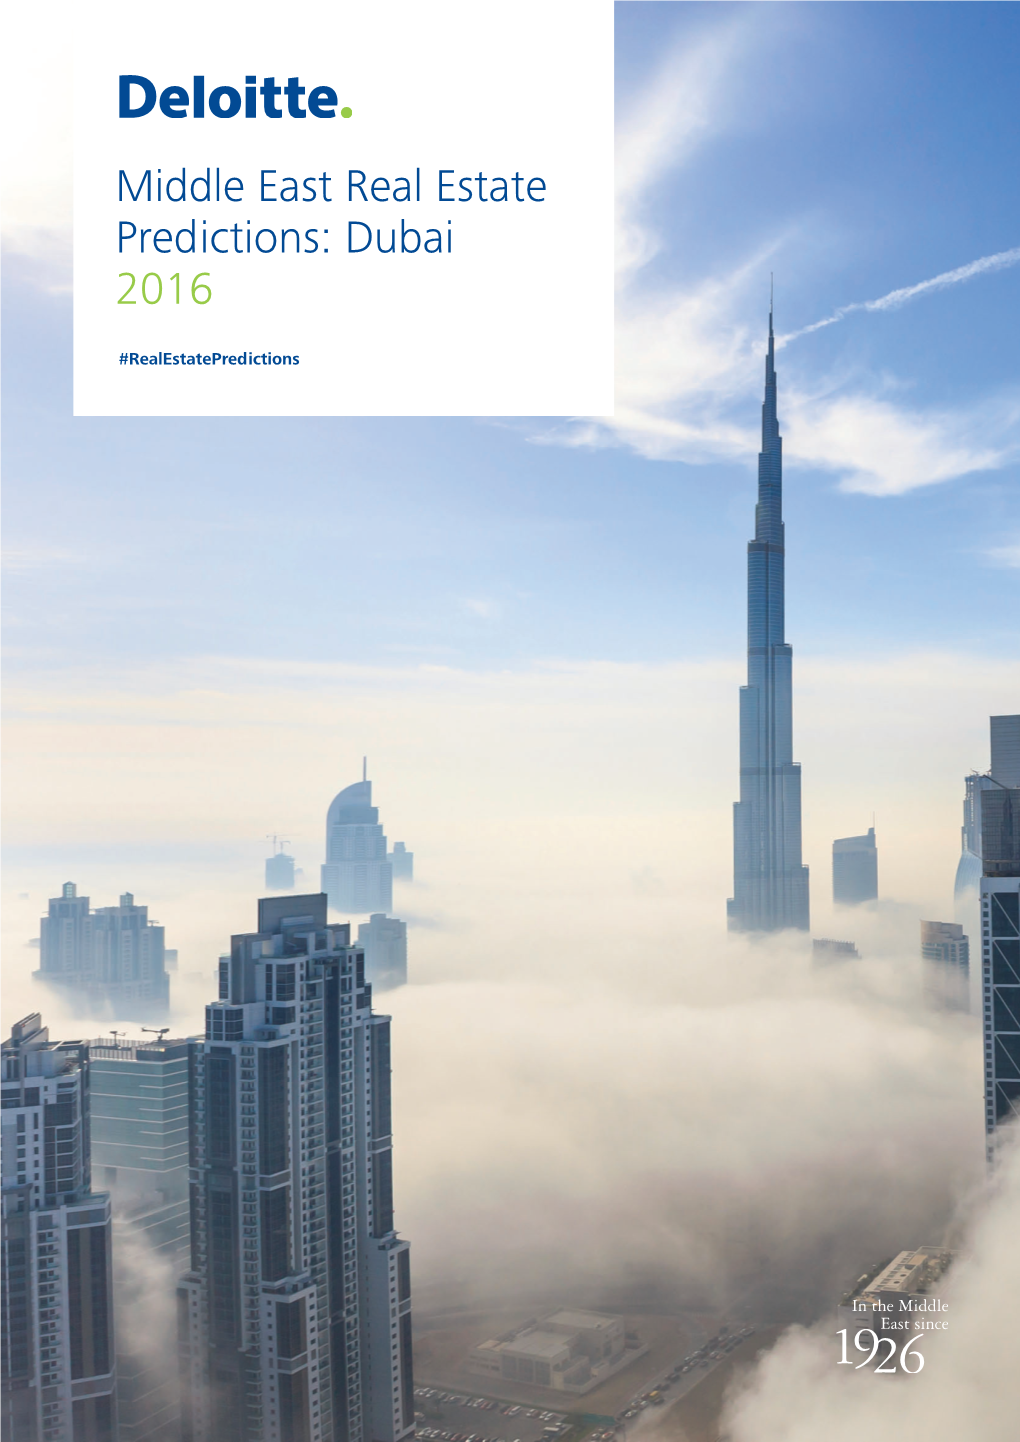 Middle East Real Estate Predictions: Dubai 2016